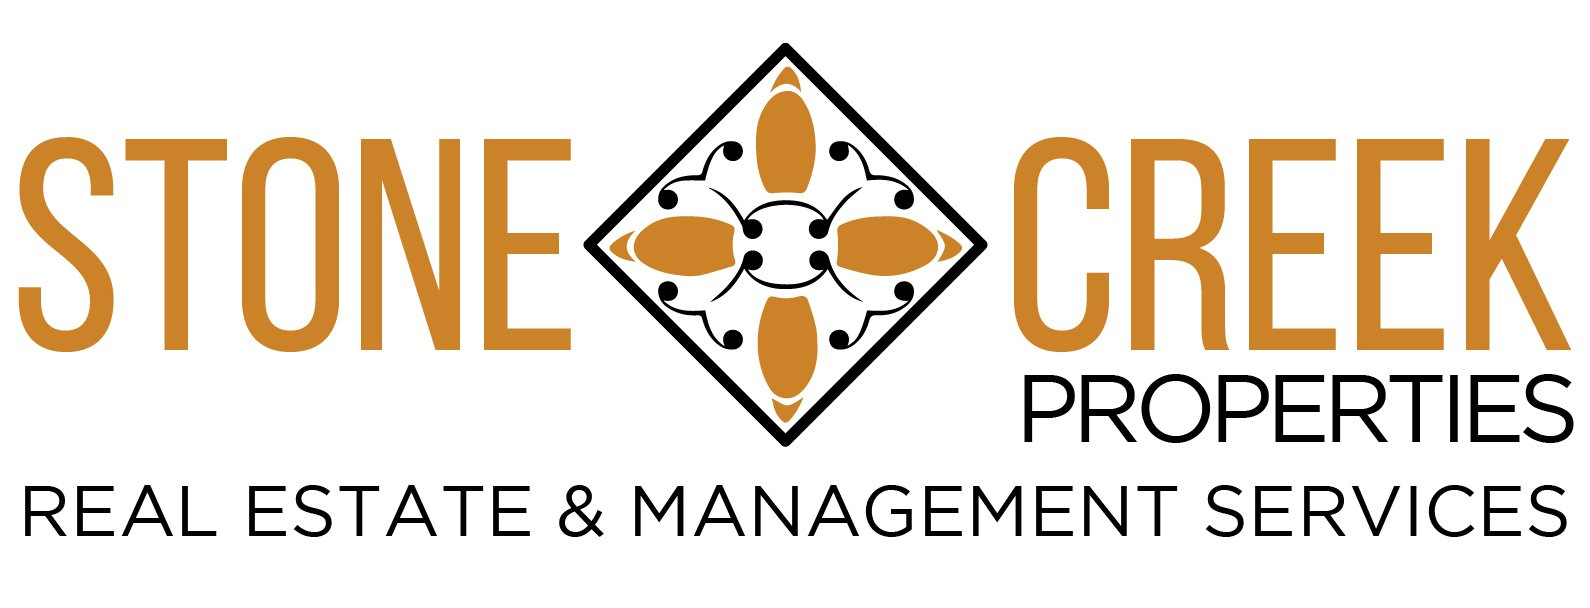 Stone Creek Properties - Logo